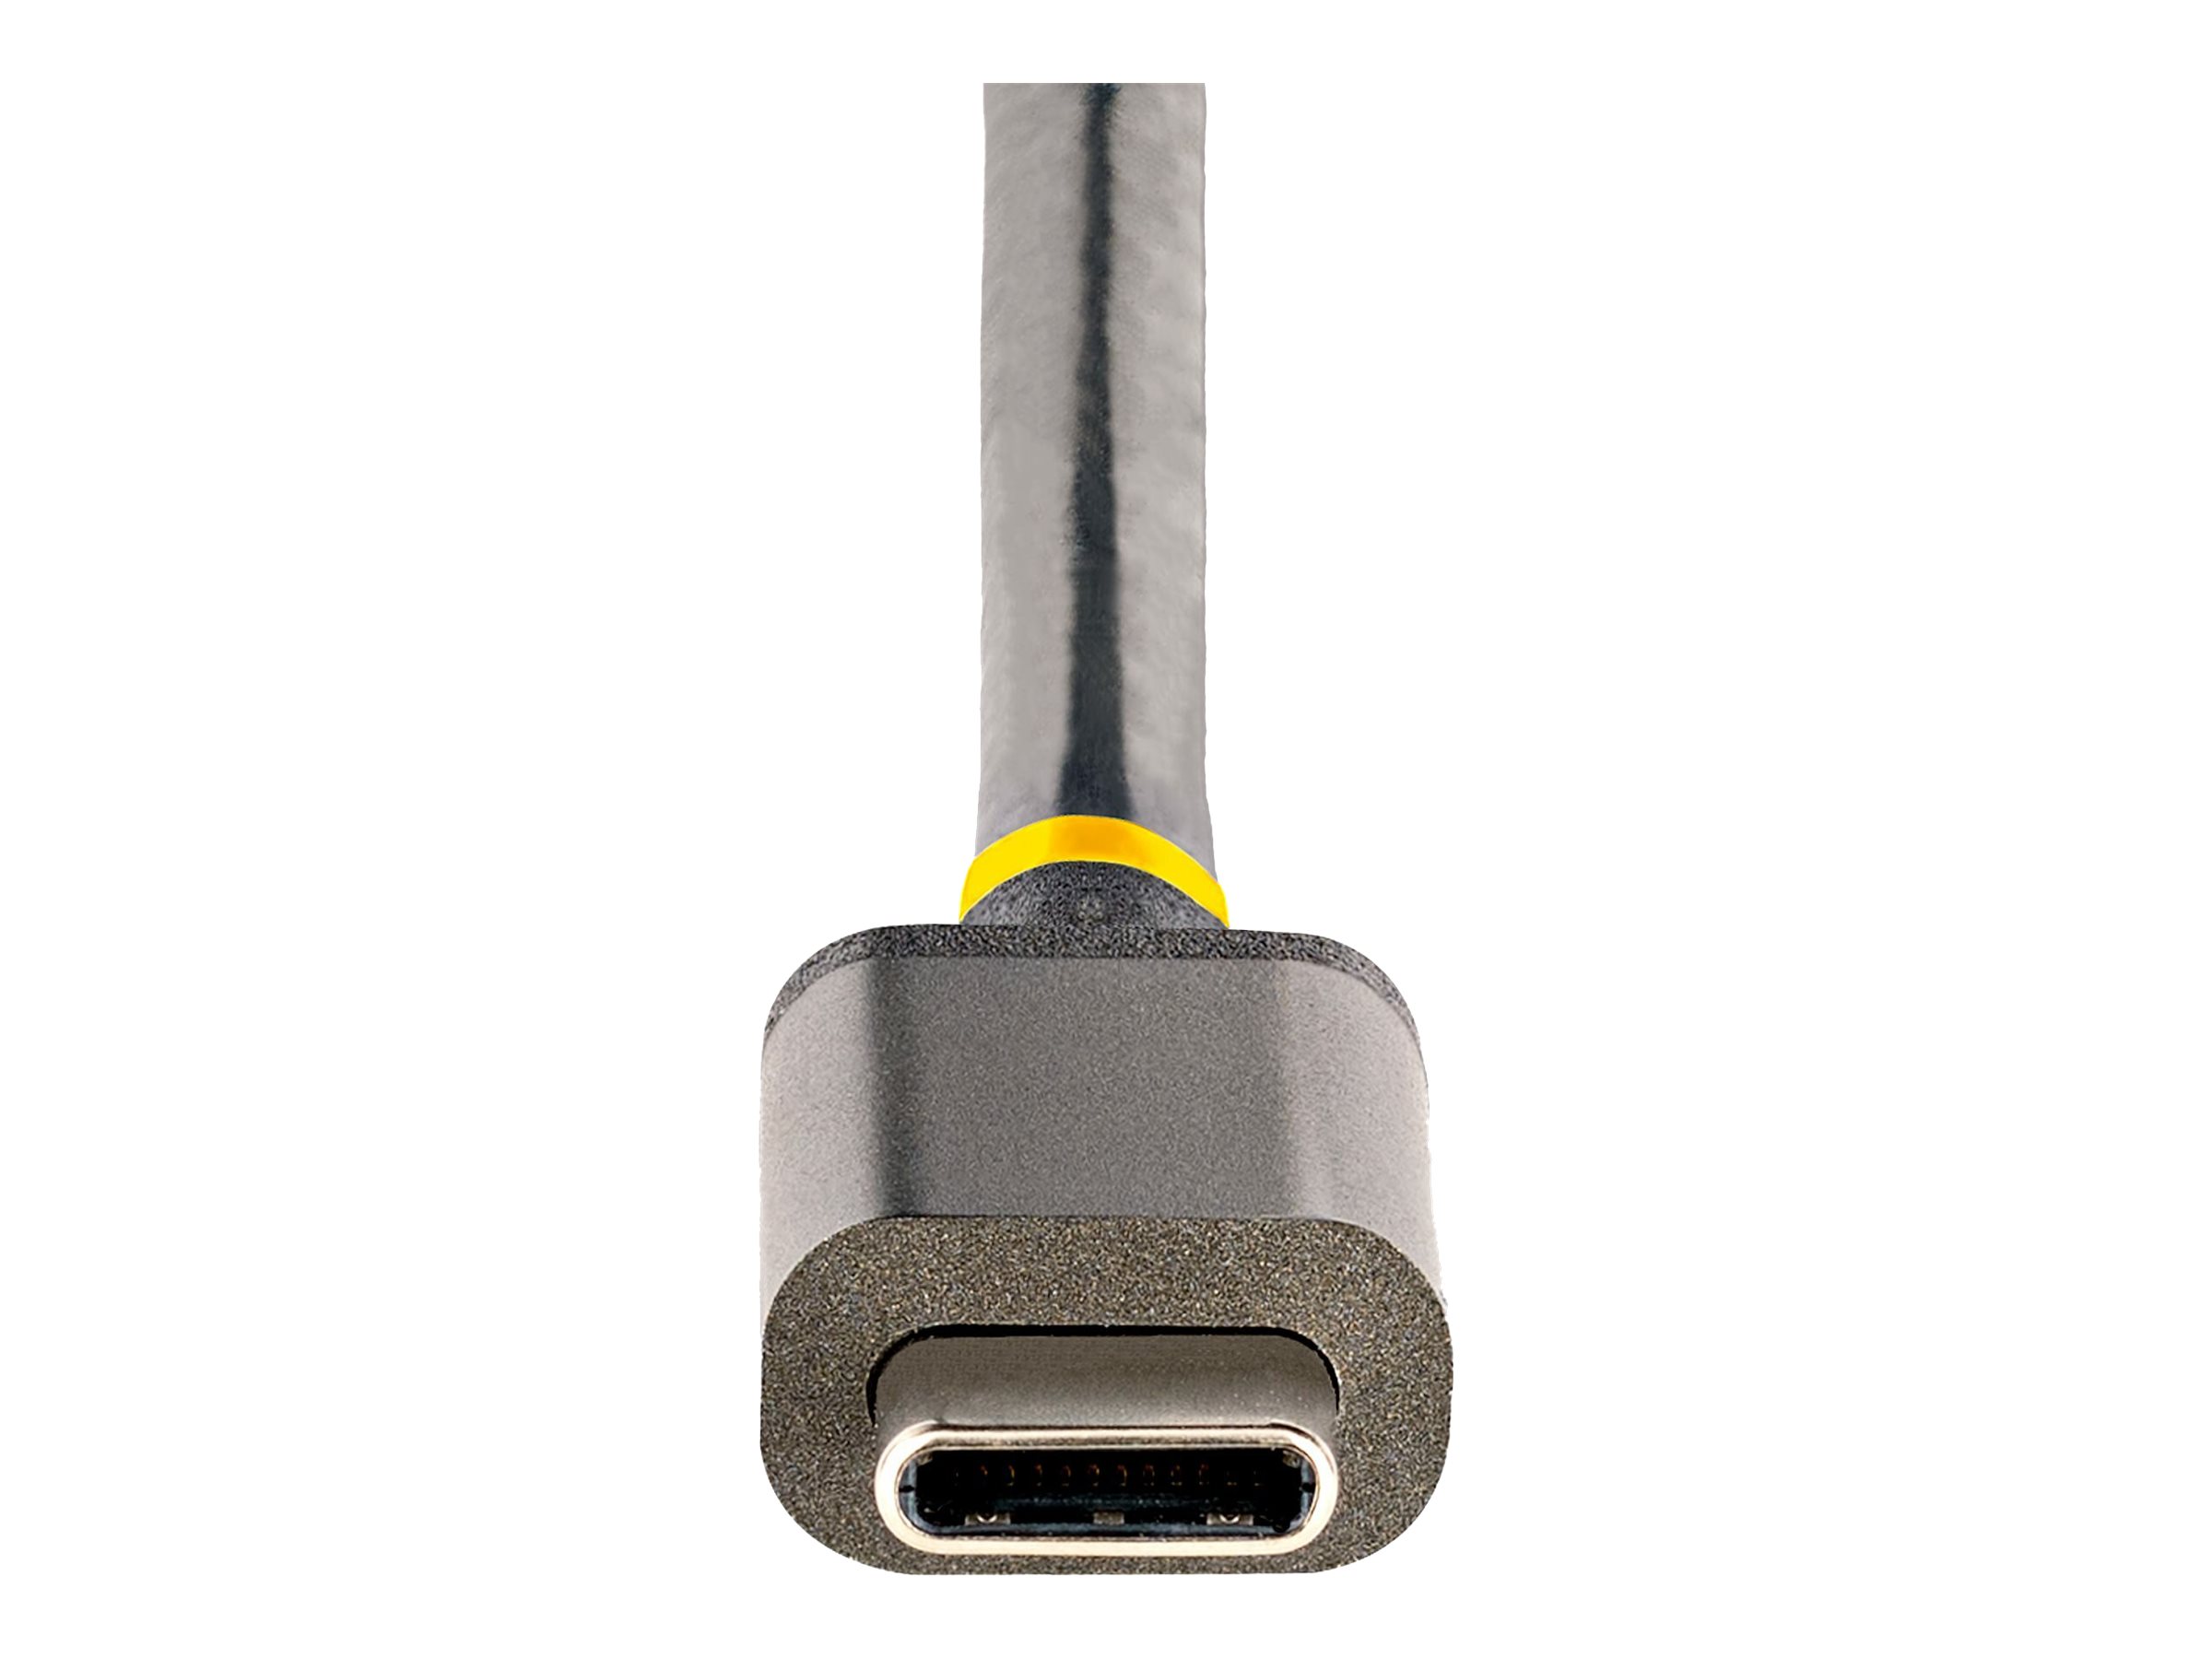 StarTech.com USB C Multiport Adapter, 4K 60Hz HDMI Anschluss, 5Gbit/s USB-A Hub, USB C auf HDMI,  100W PD, GbE, SD/MicroSD, 30cm Kabel, Reiseadapter, Thunderbolt 3 Dockingstation (115B-USBC-MULTIPORT)